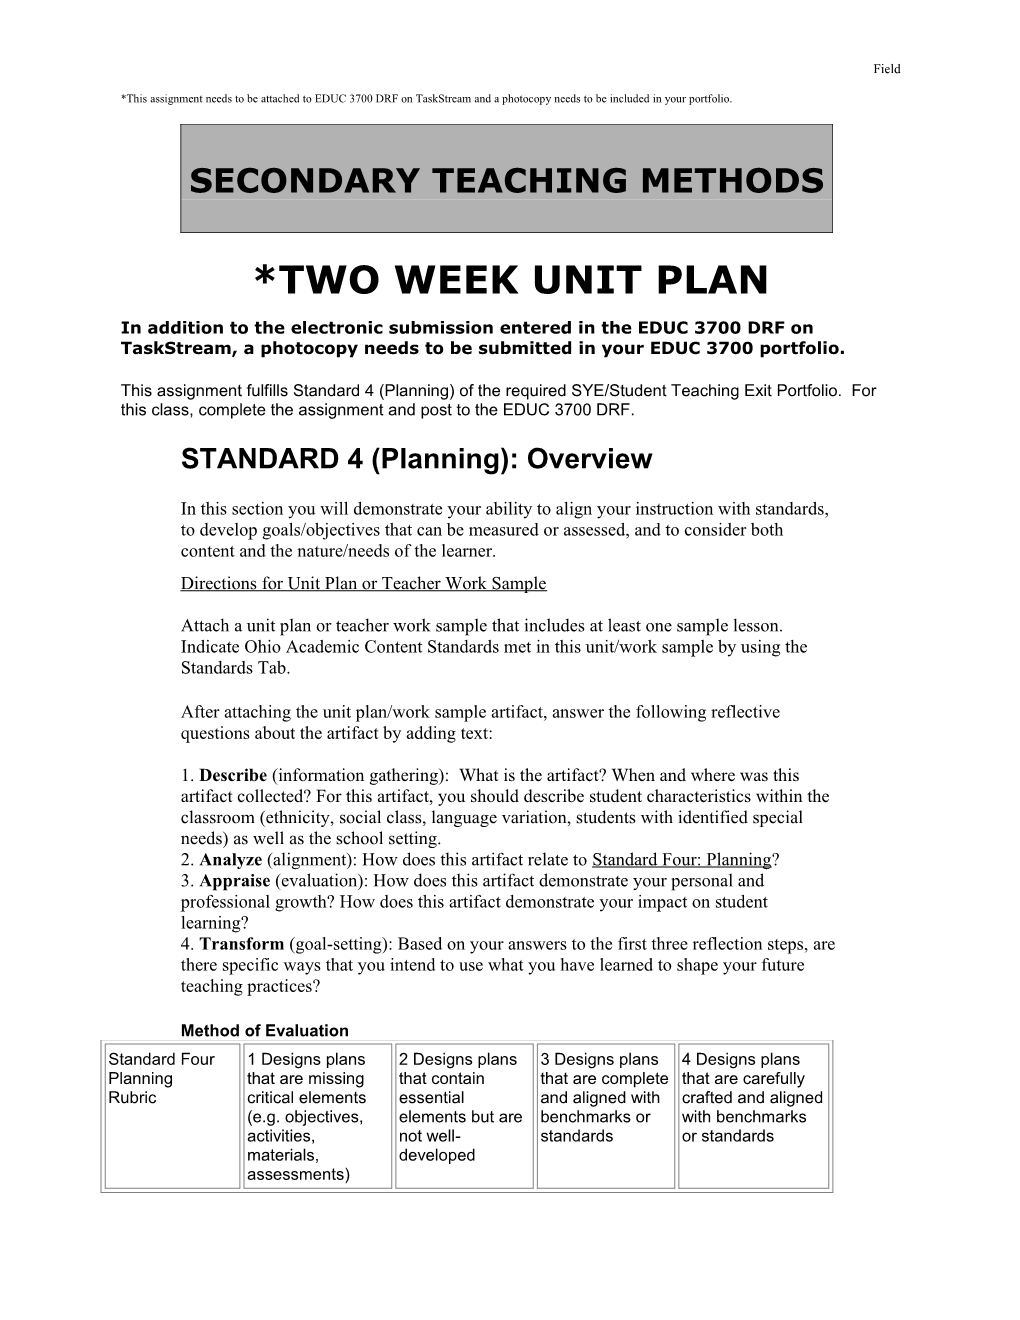 Secondary Teaching Methods